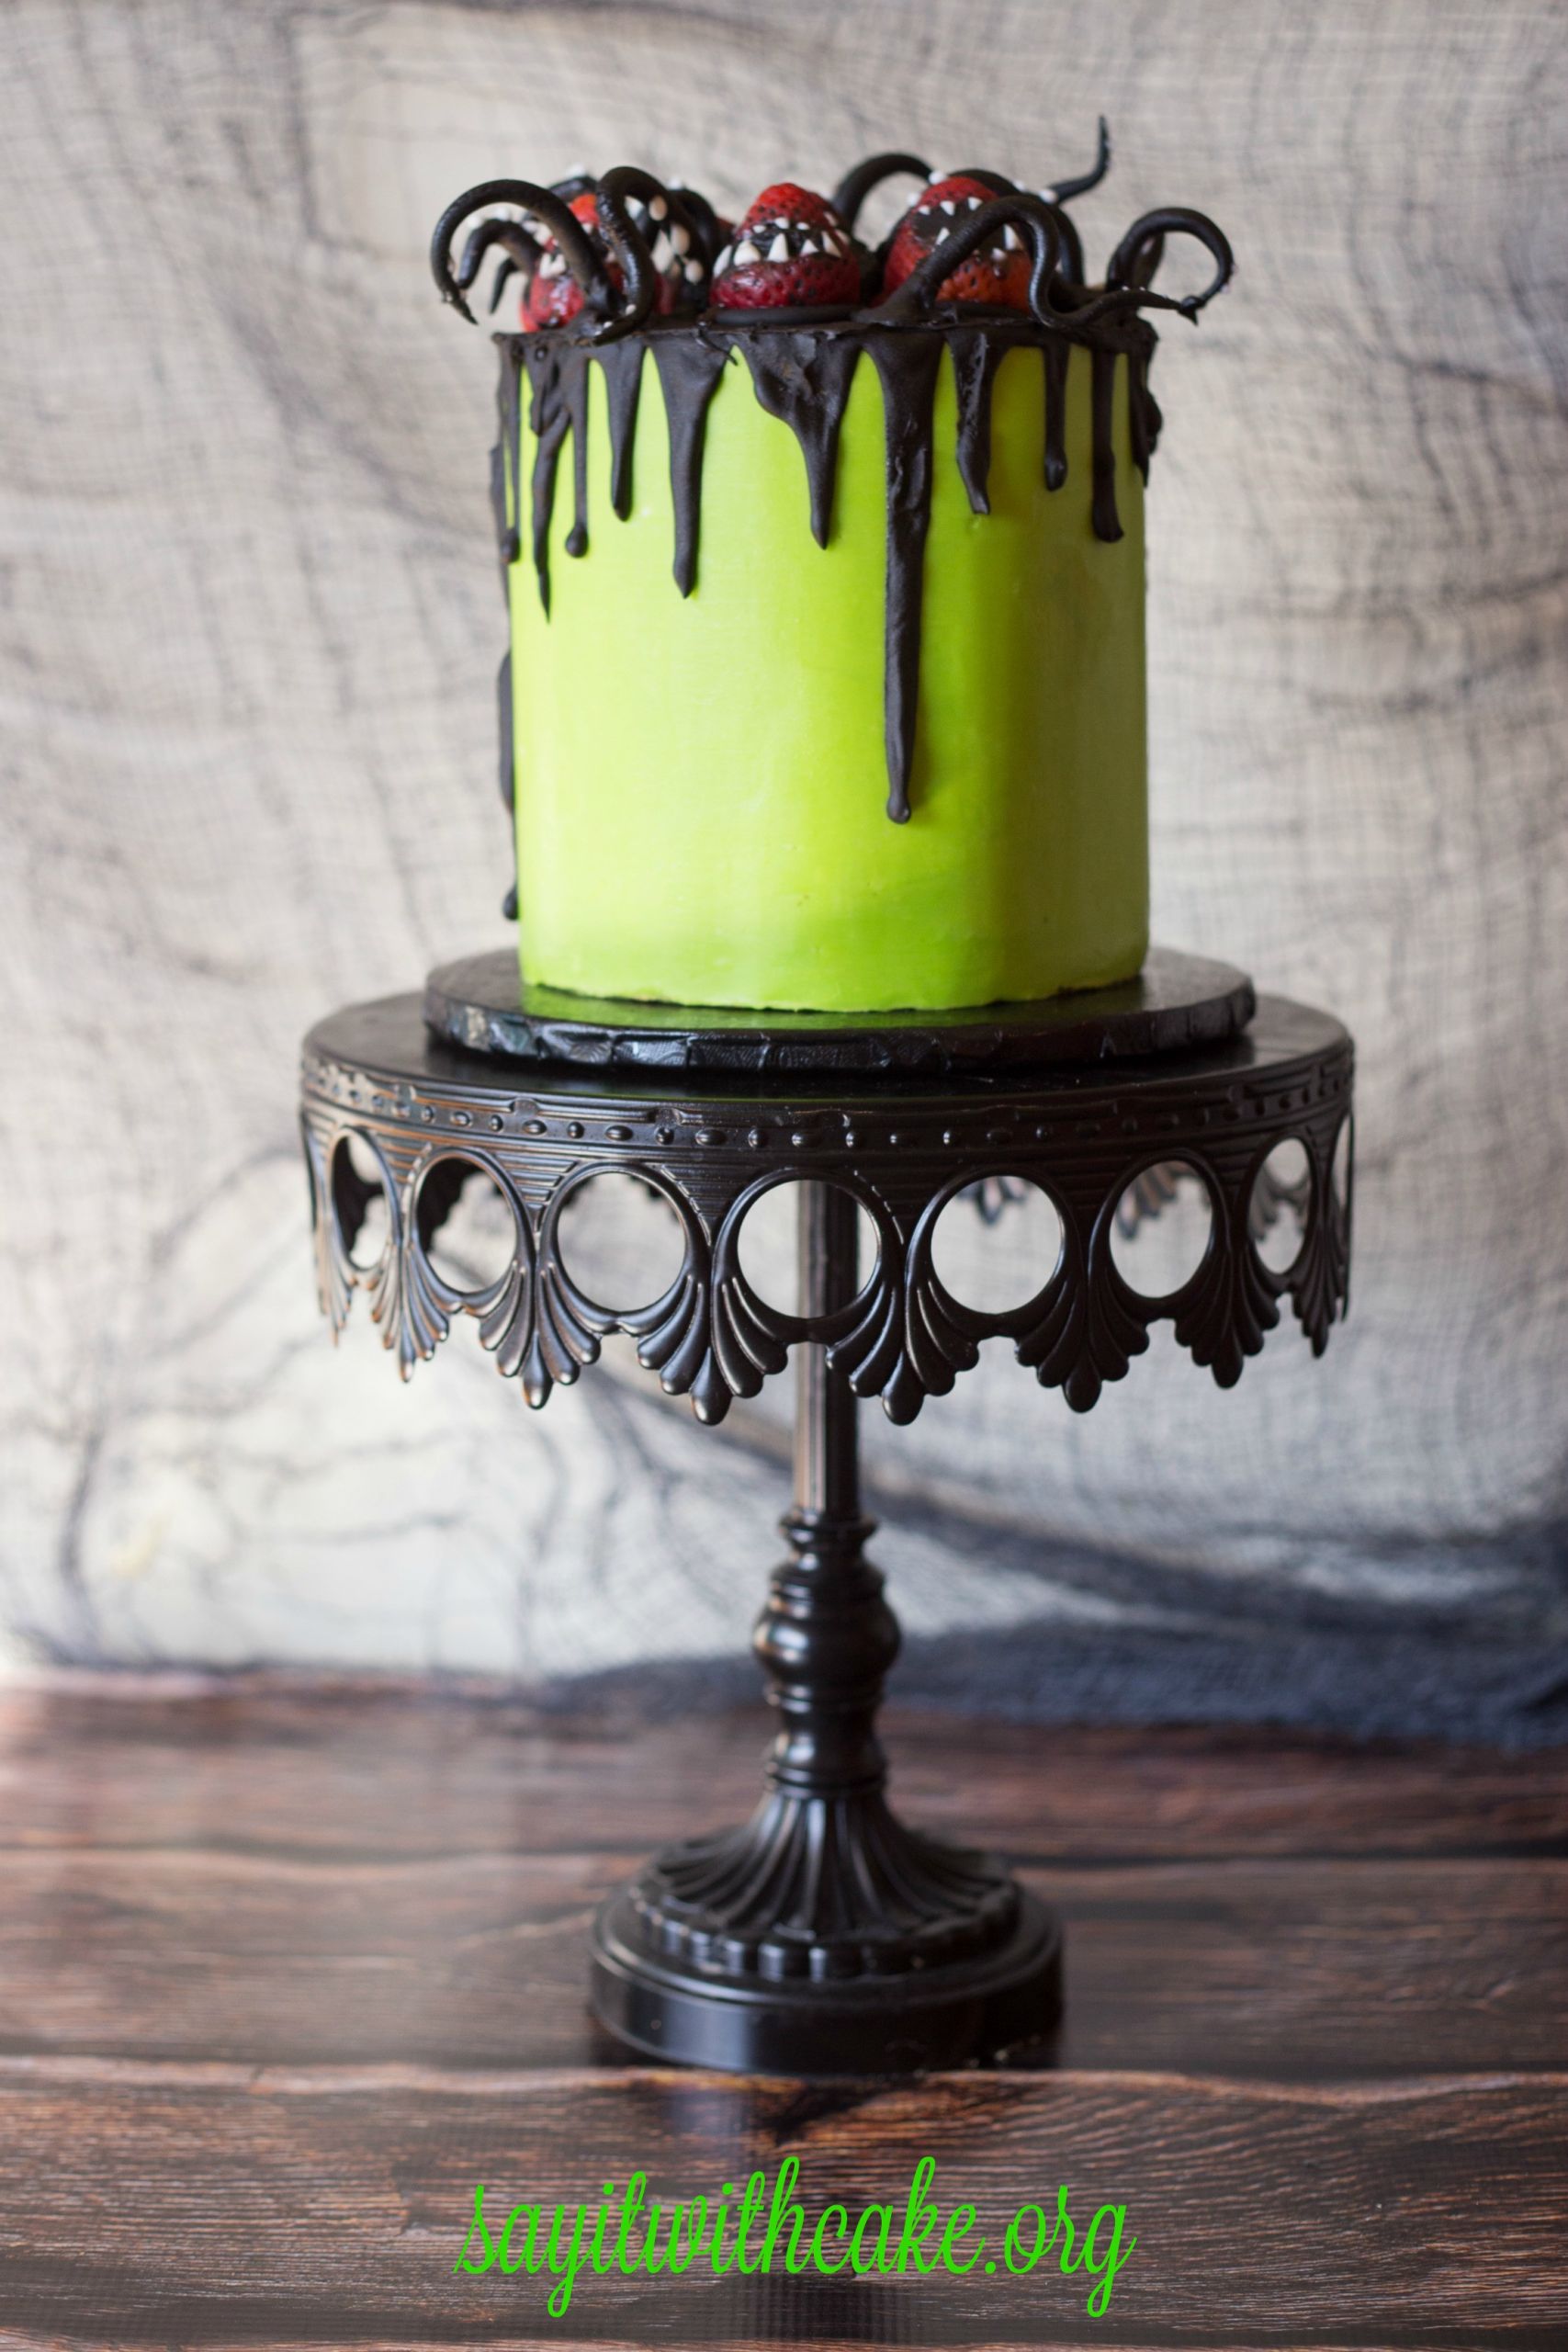 Spooky Halloween Cakes
 Creepy Halloween Cake – Say it With Cake